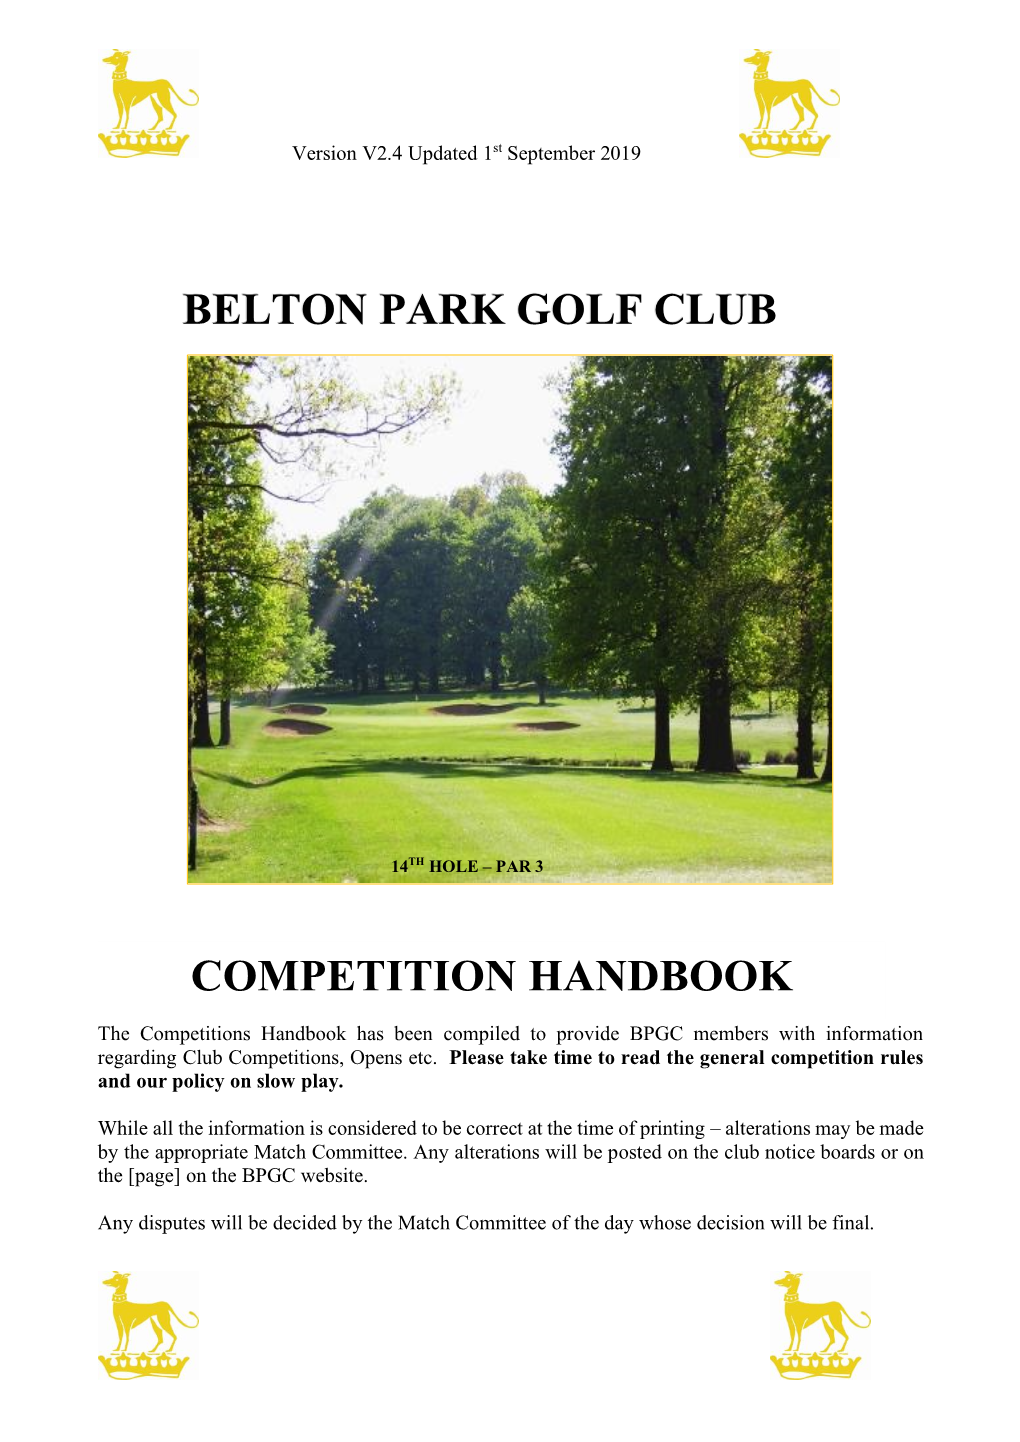 Belton Park Golf Club Competition Handbook